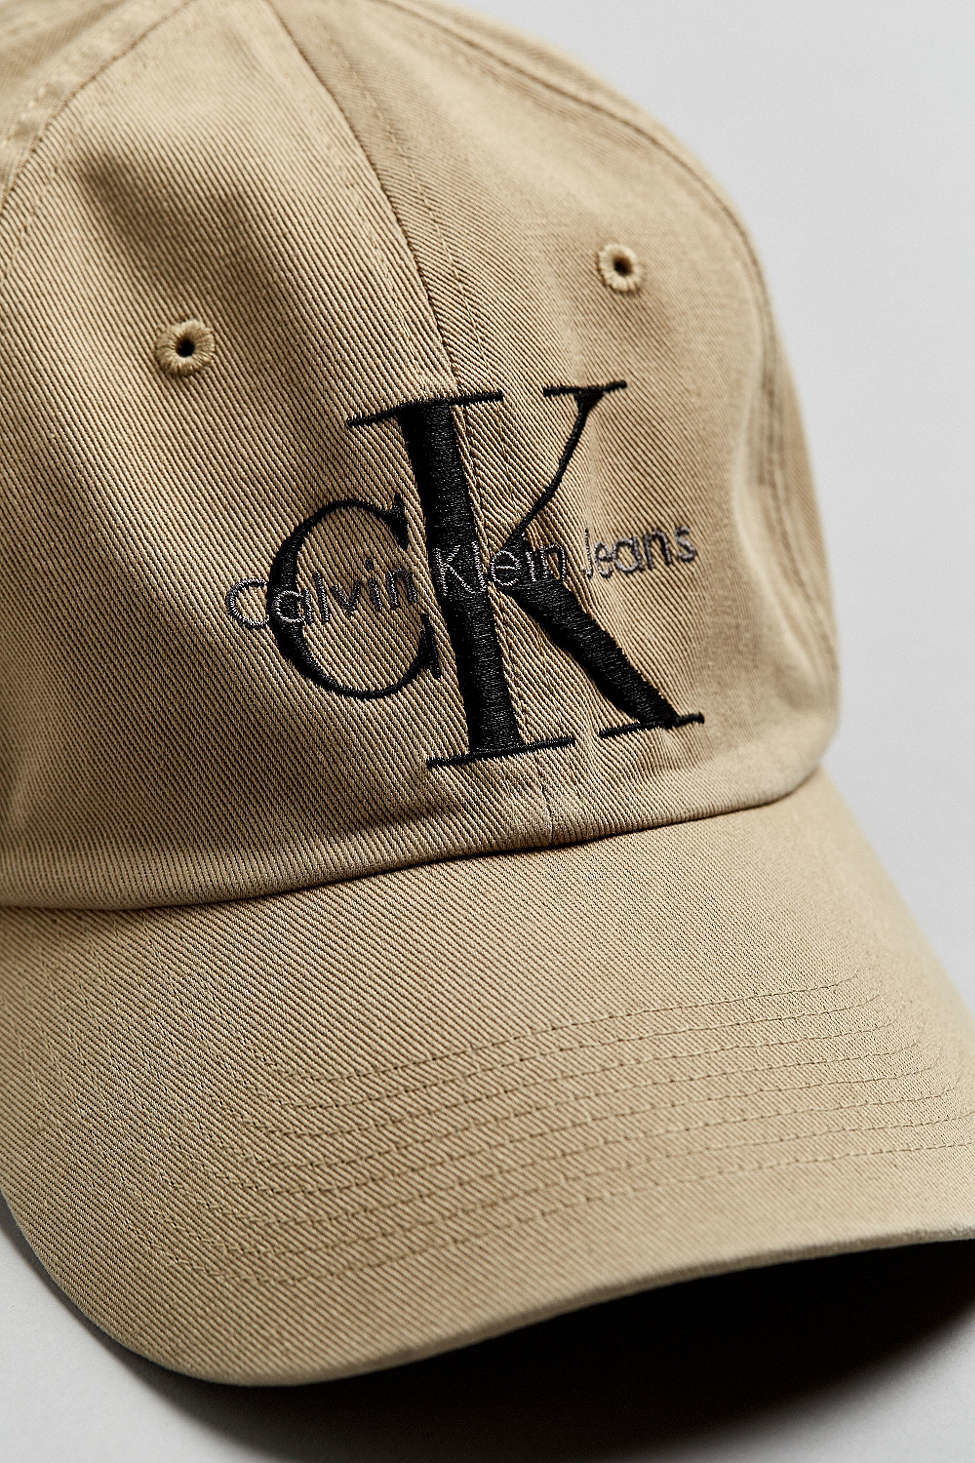 Calvin Klein Baseball Hat in Natural | Lyst